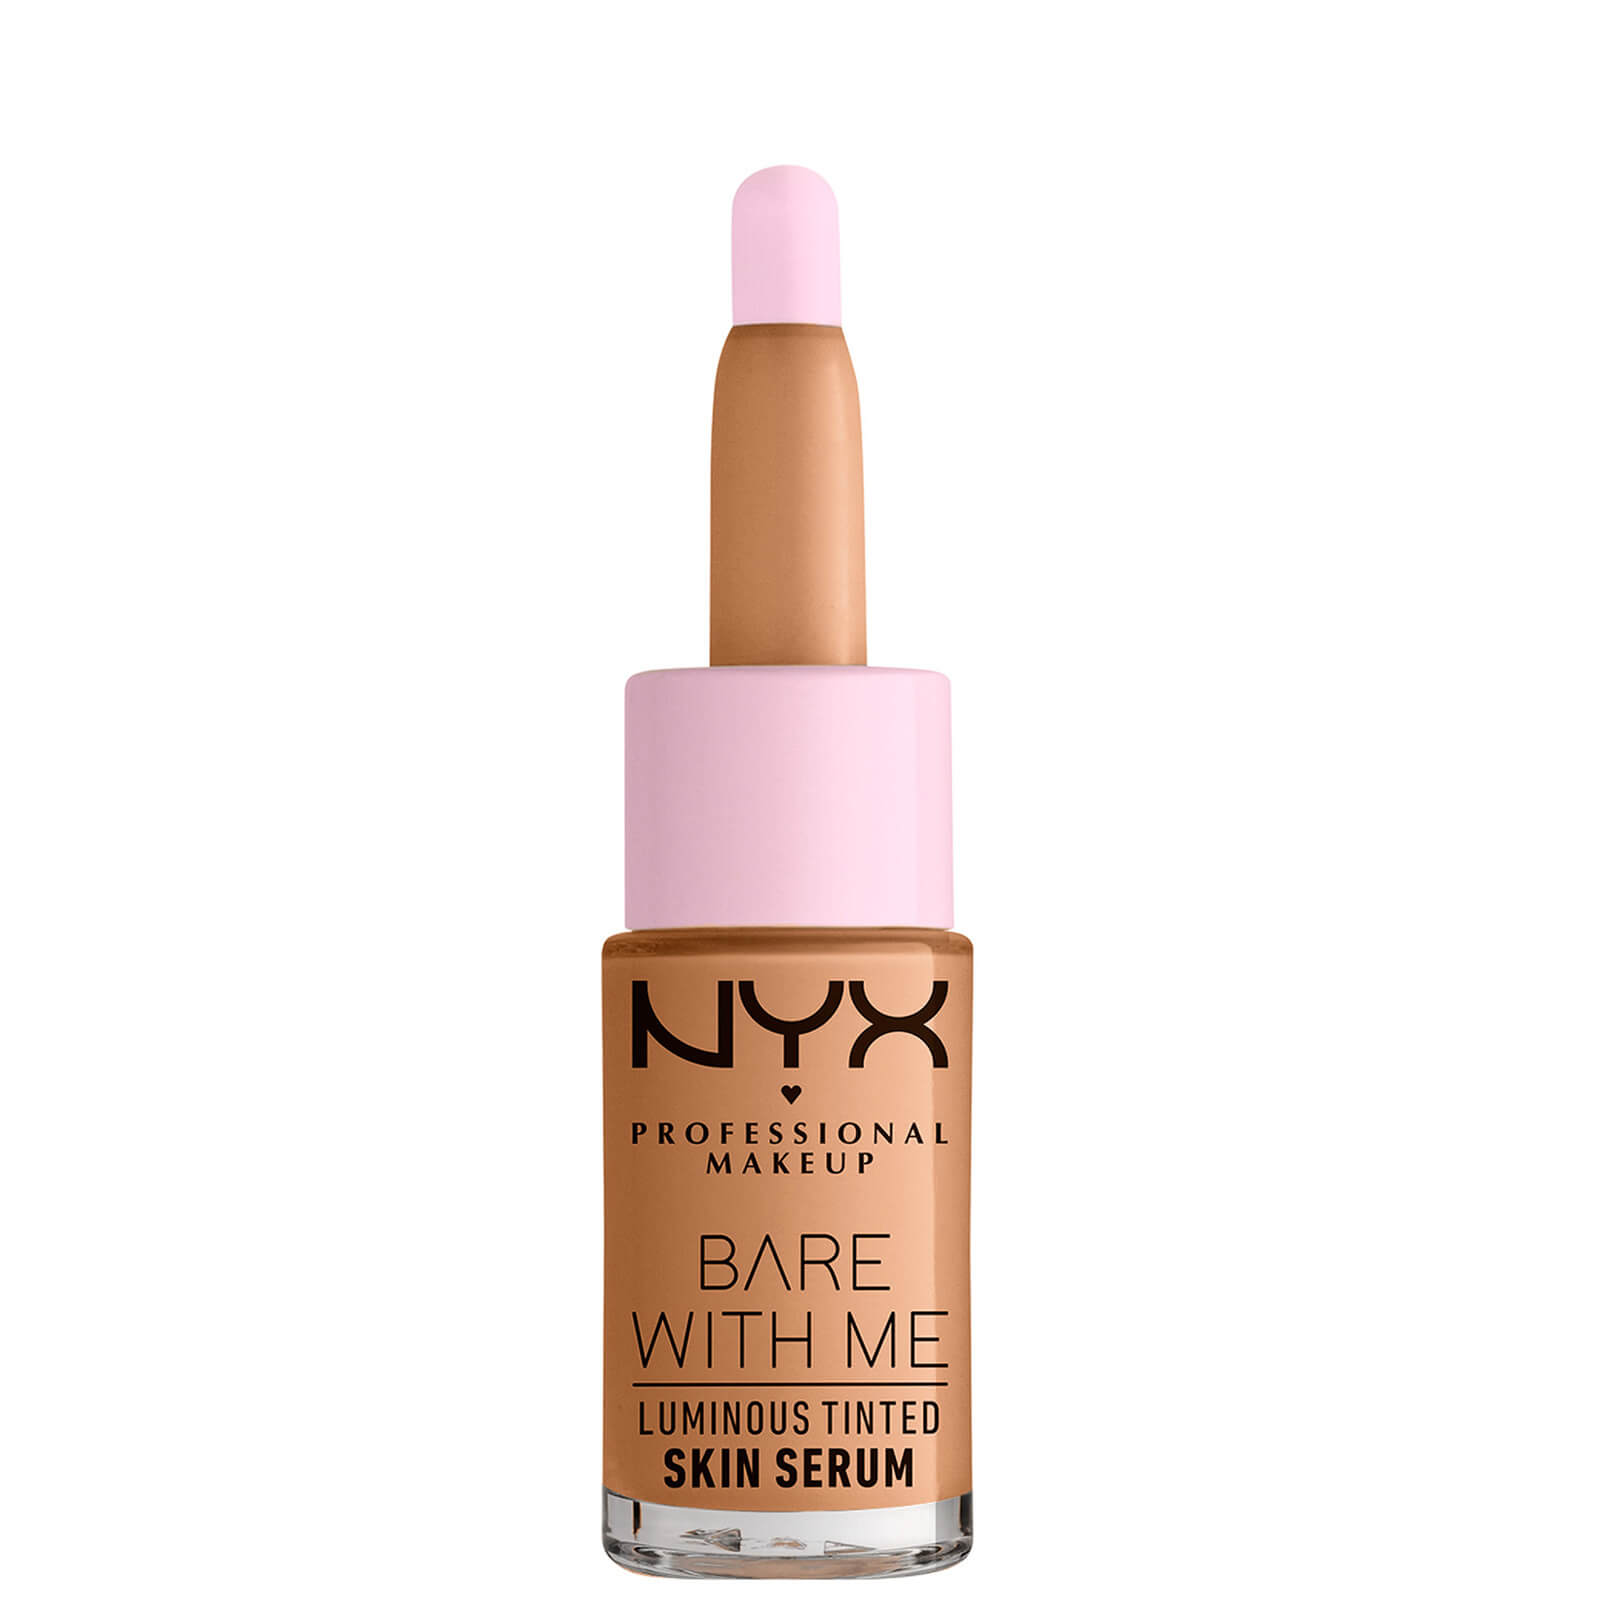 NYX Professional Makeup Bare With Me Luminous Tinted Skin Serum 12.6g (Various Shades) - Medium